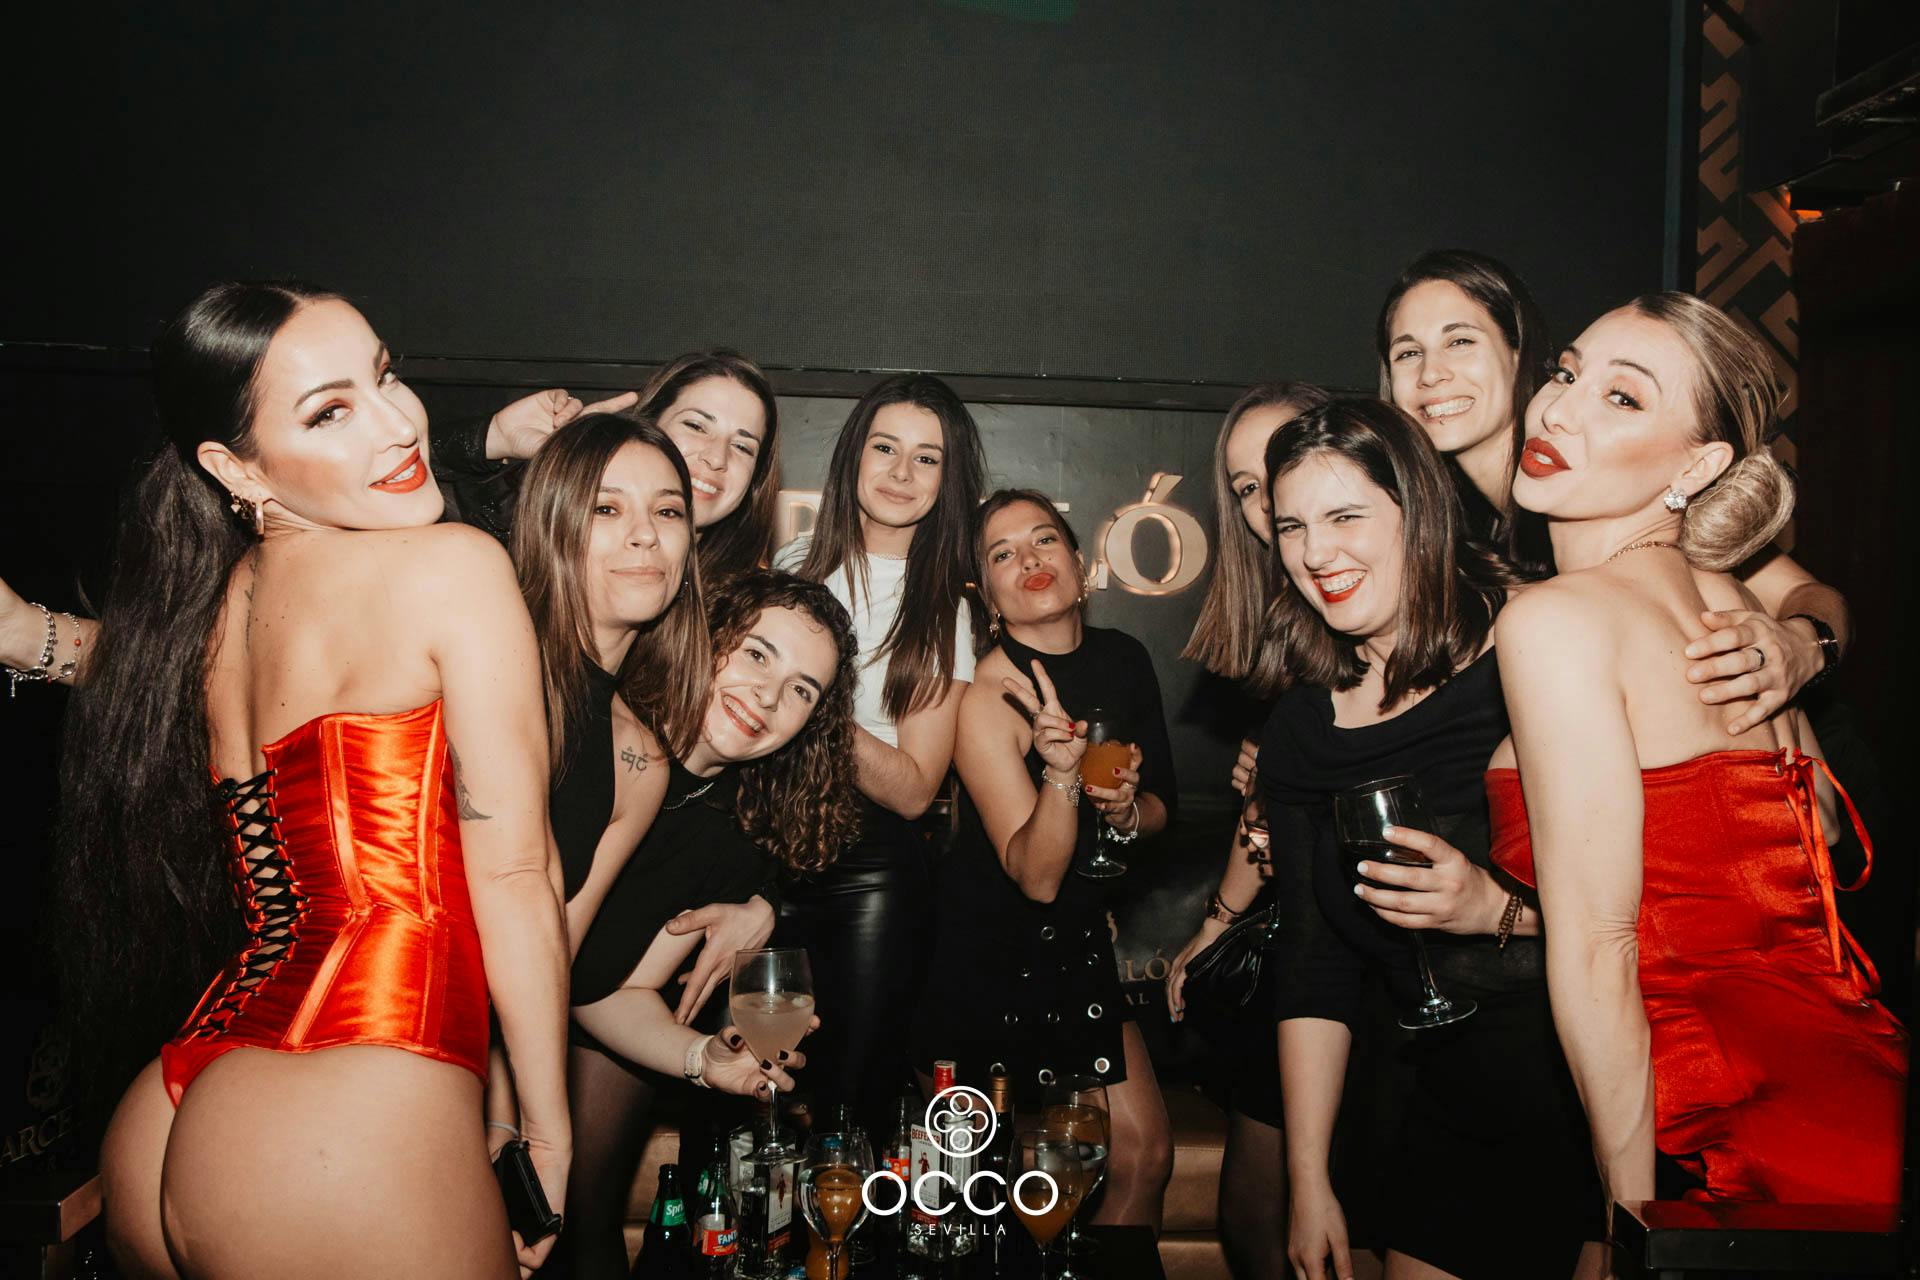 Occo grupo chicas reservado bailarinas rojas pose fiesta elixir